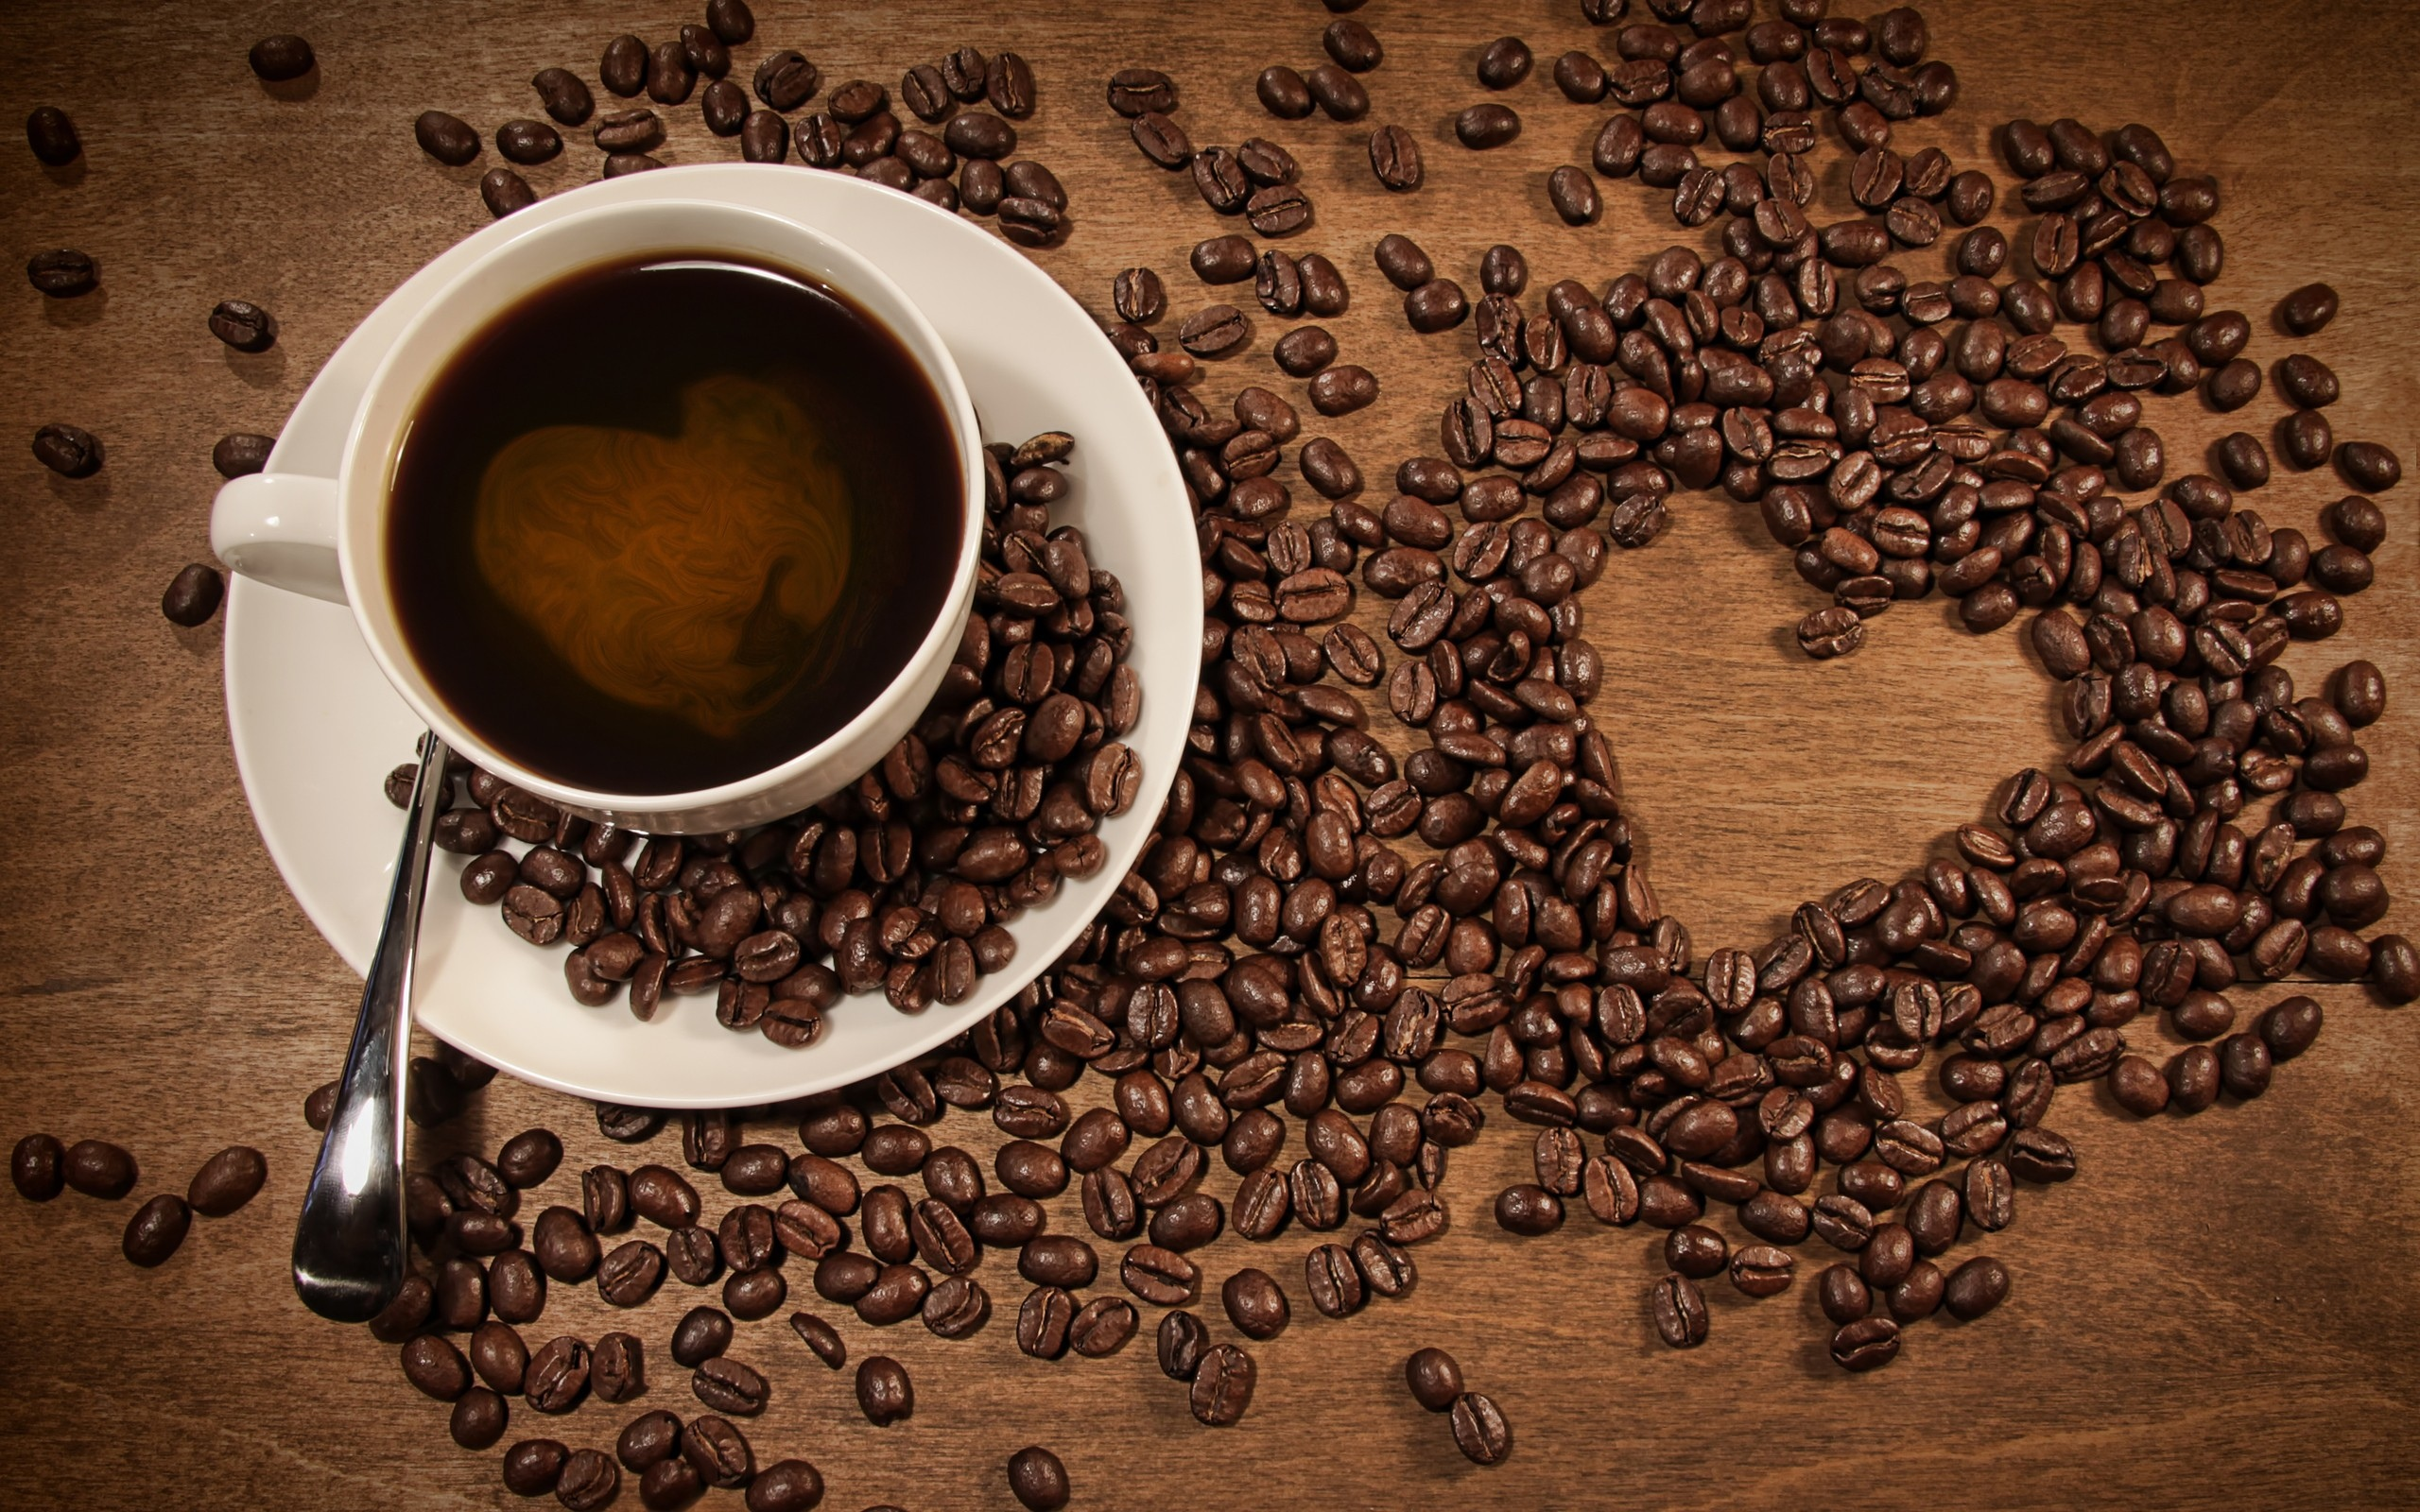 coffee, hearts, coffee beans, сердца, чашки, кофе, кофе в зернах, cups